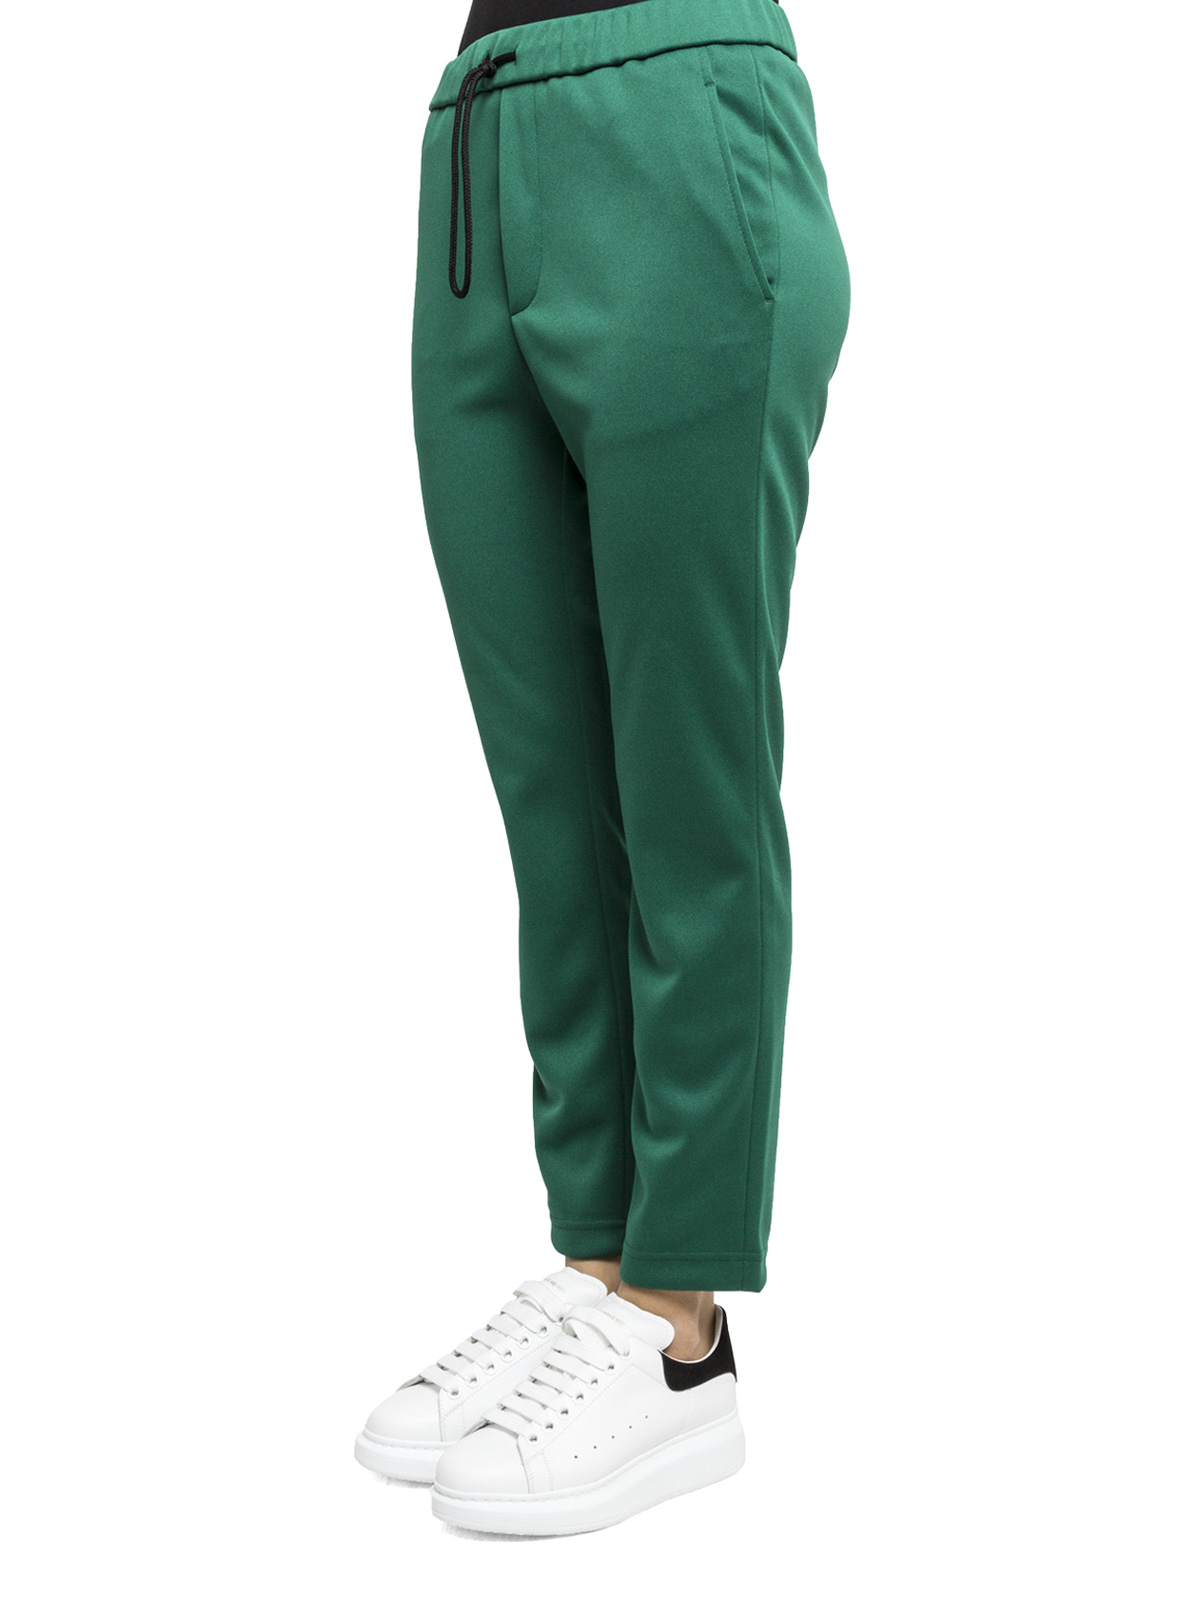 Golden Goose - Pantalón Chándal Verde Para Mujer - Pantalones deportivos -  G30WP018A1